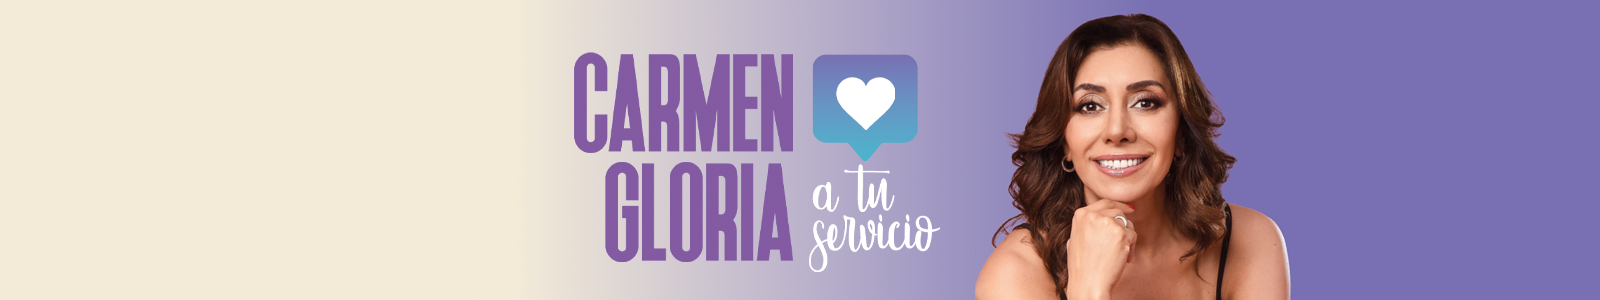 Carmen Gloria a tu servicio